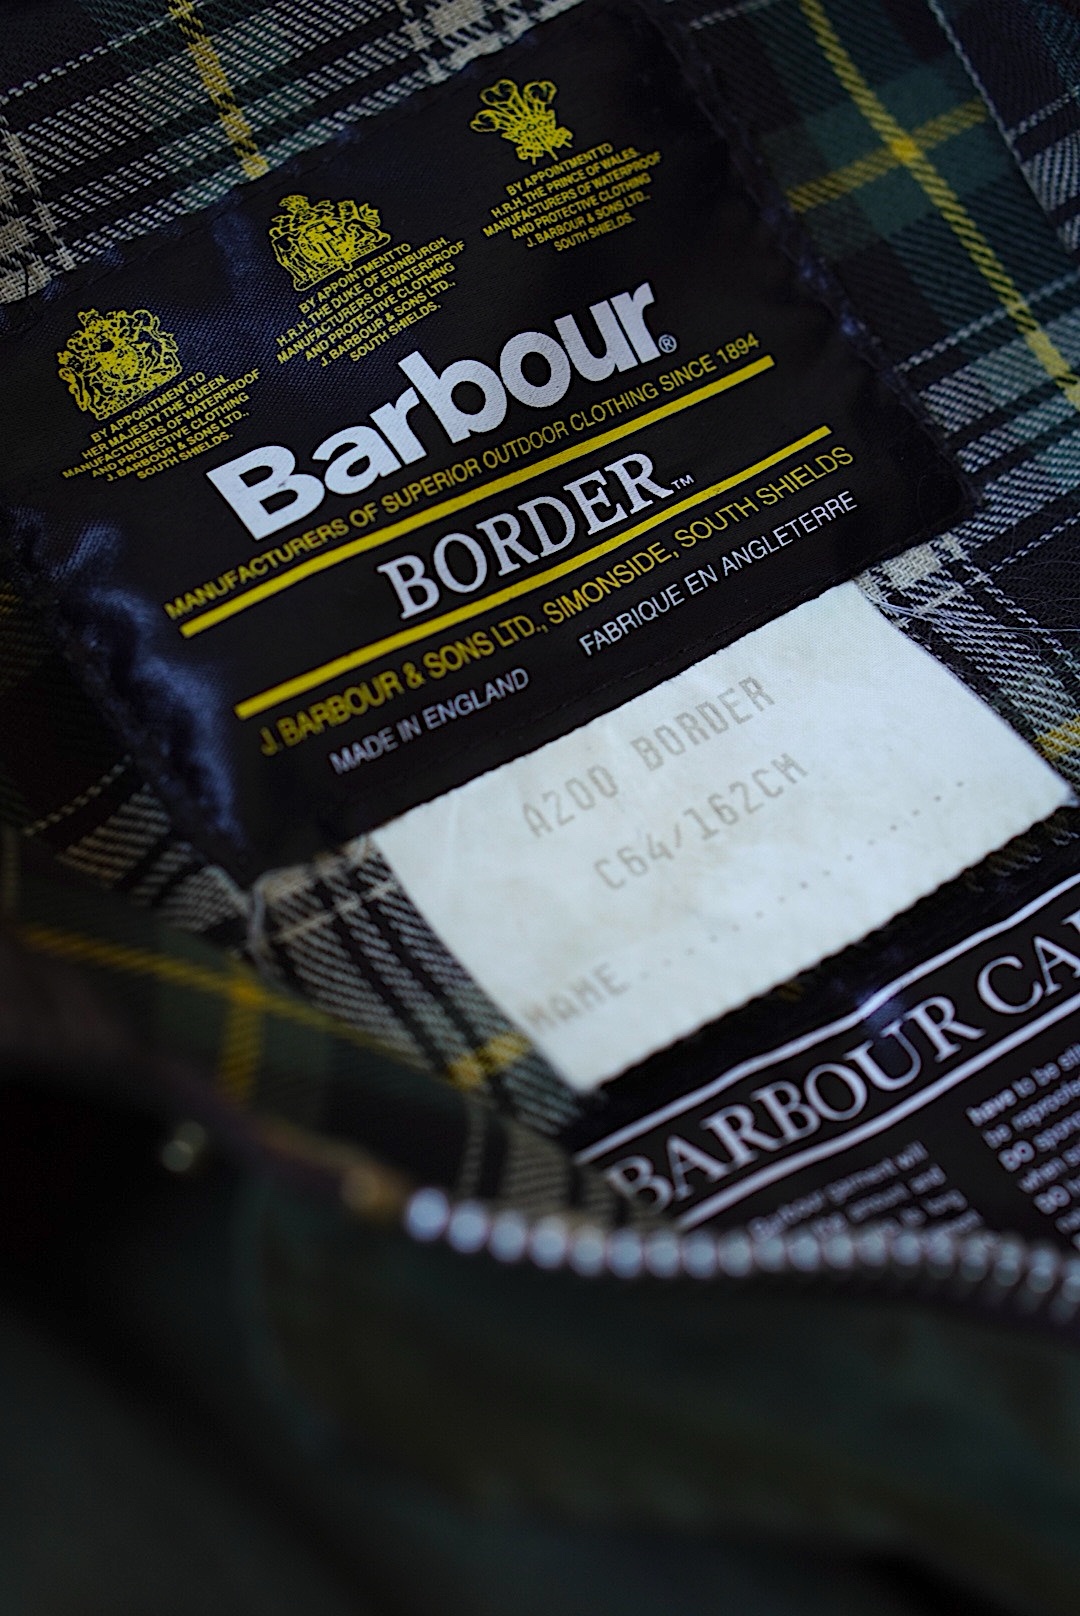 Barbour Border sage 64 (3Crown Special Size)